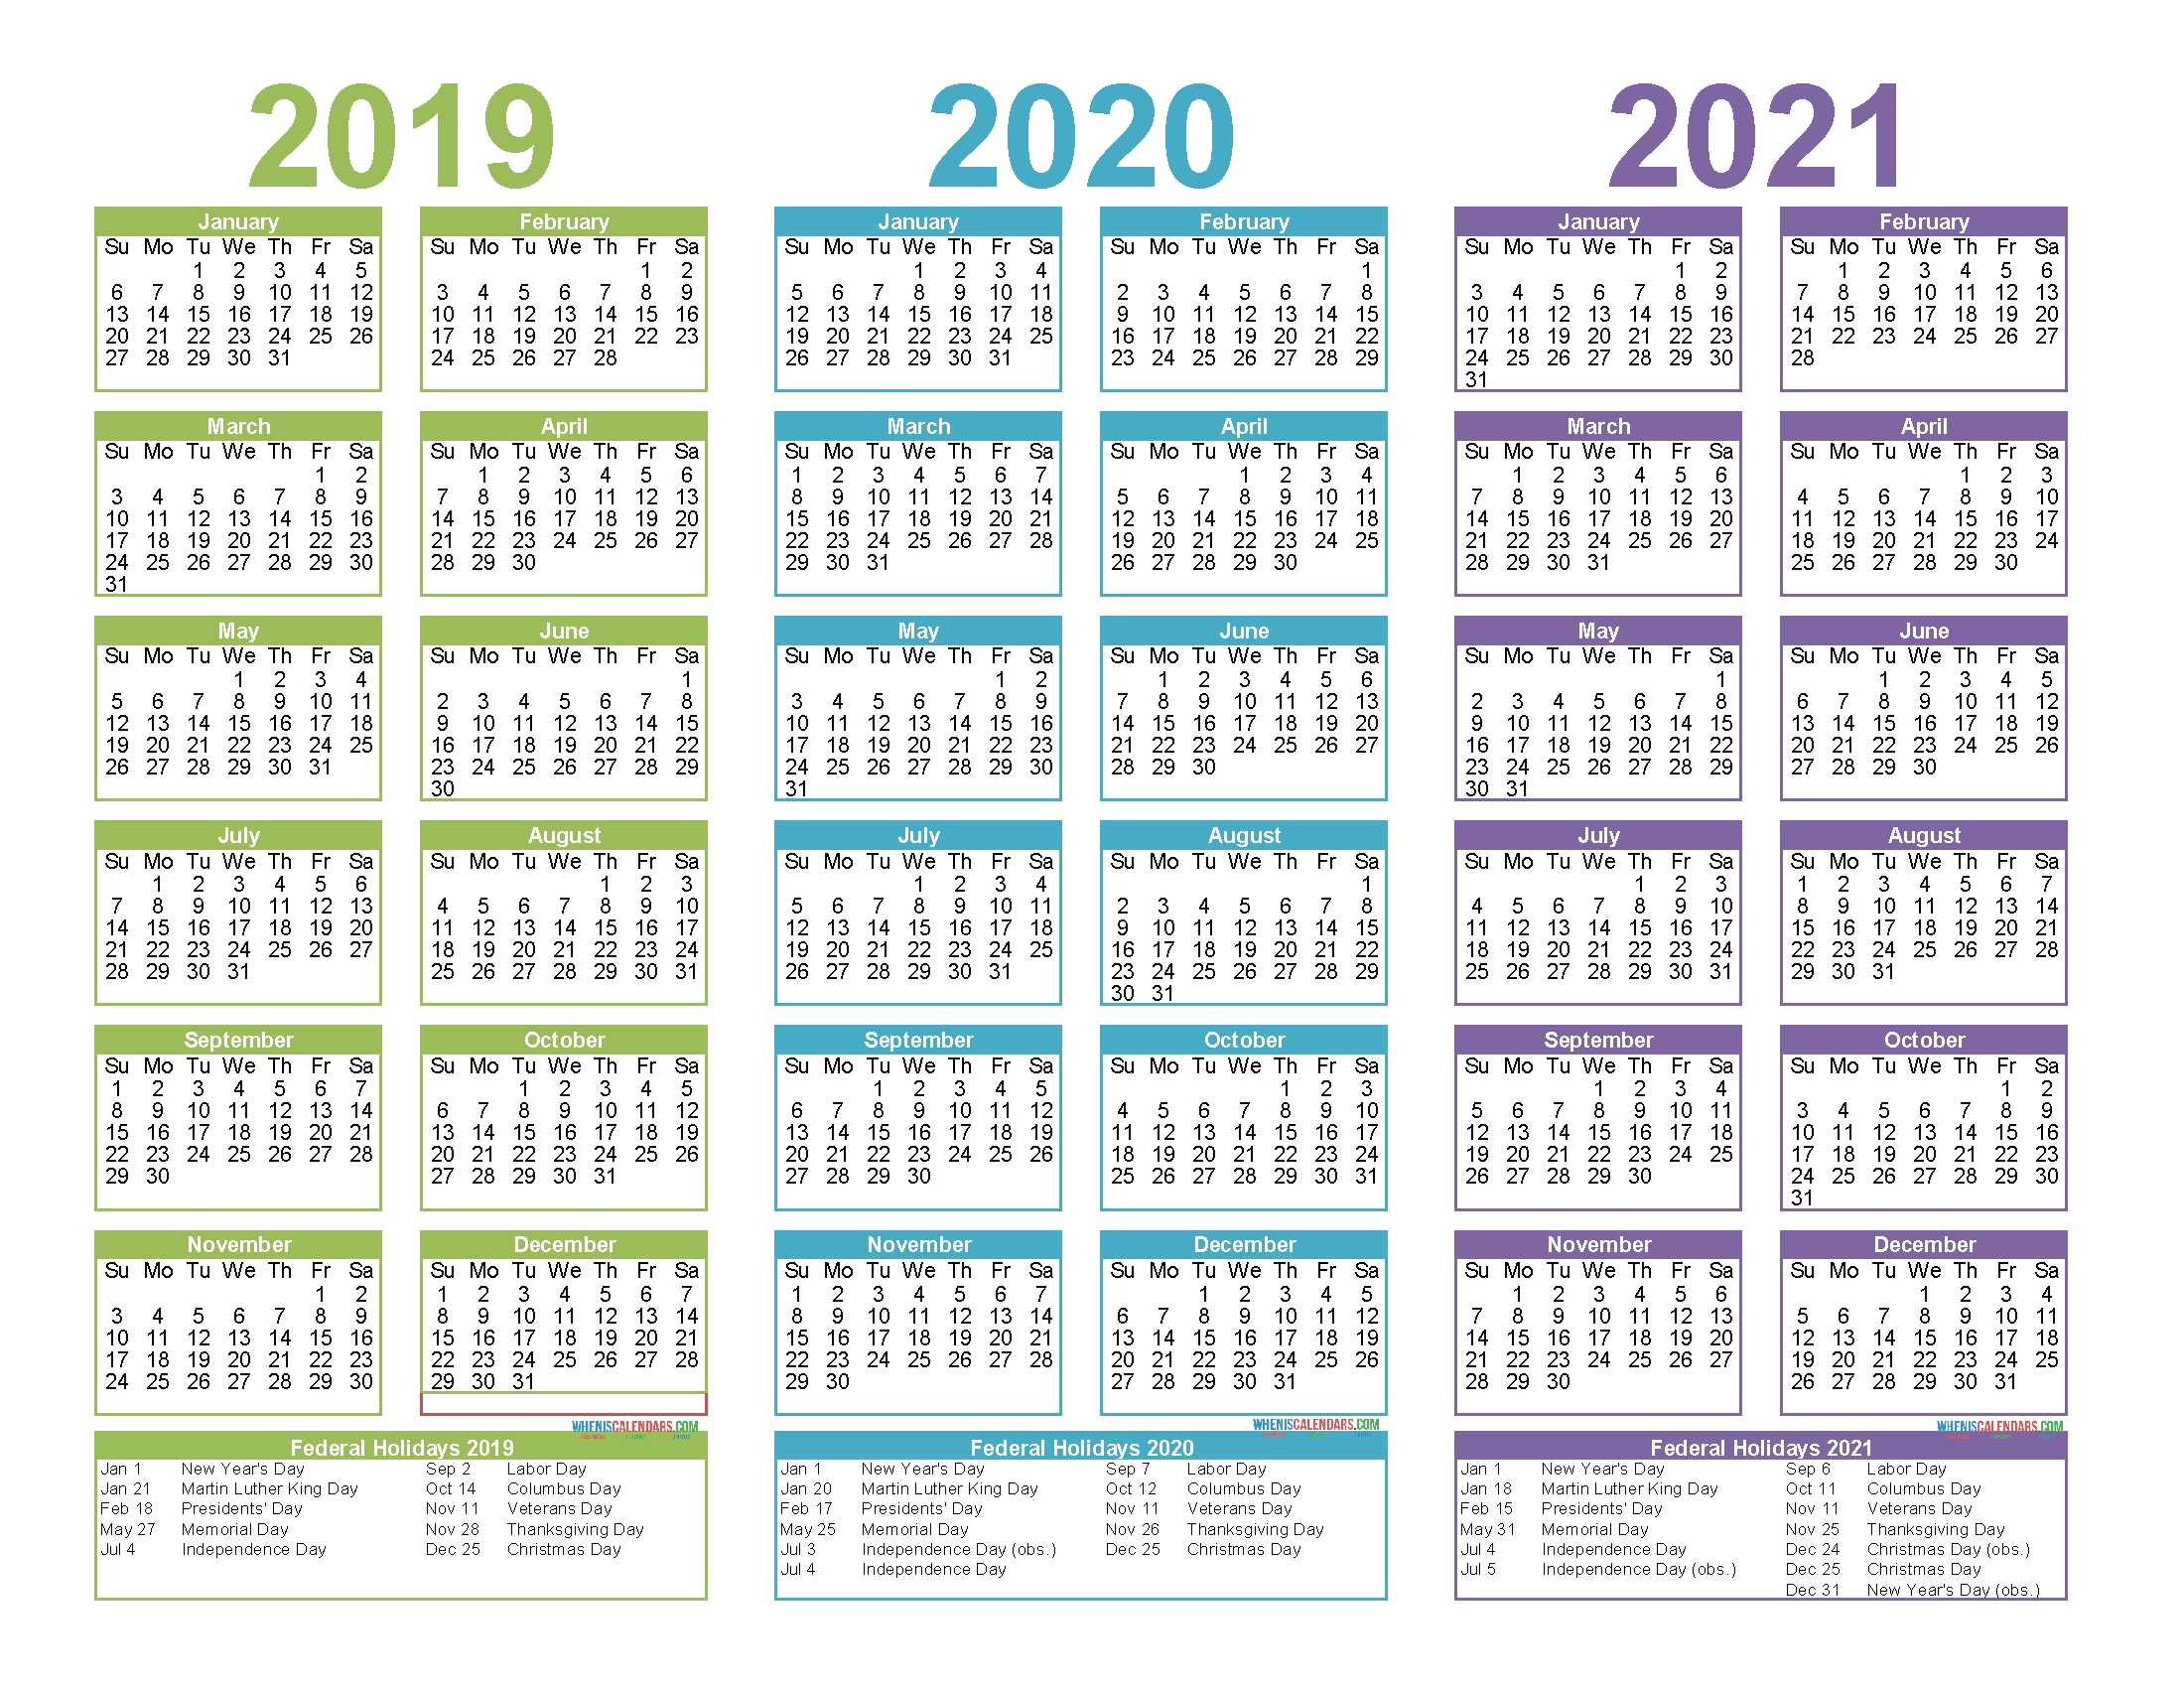 2019 To 2021 3 Year Calendar Printable Free Pdf, Word, Image Perky Free Printable 3 Year Calendar 2019 To 2020